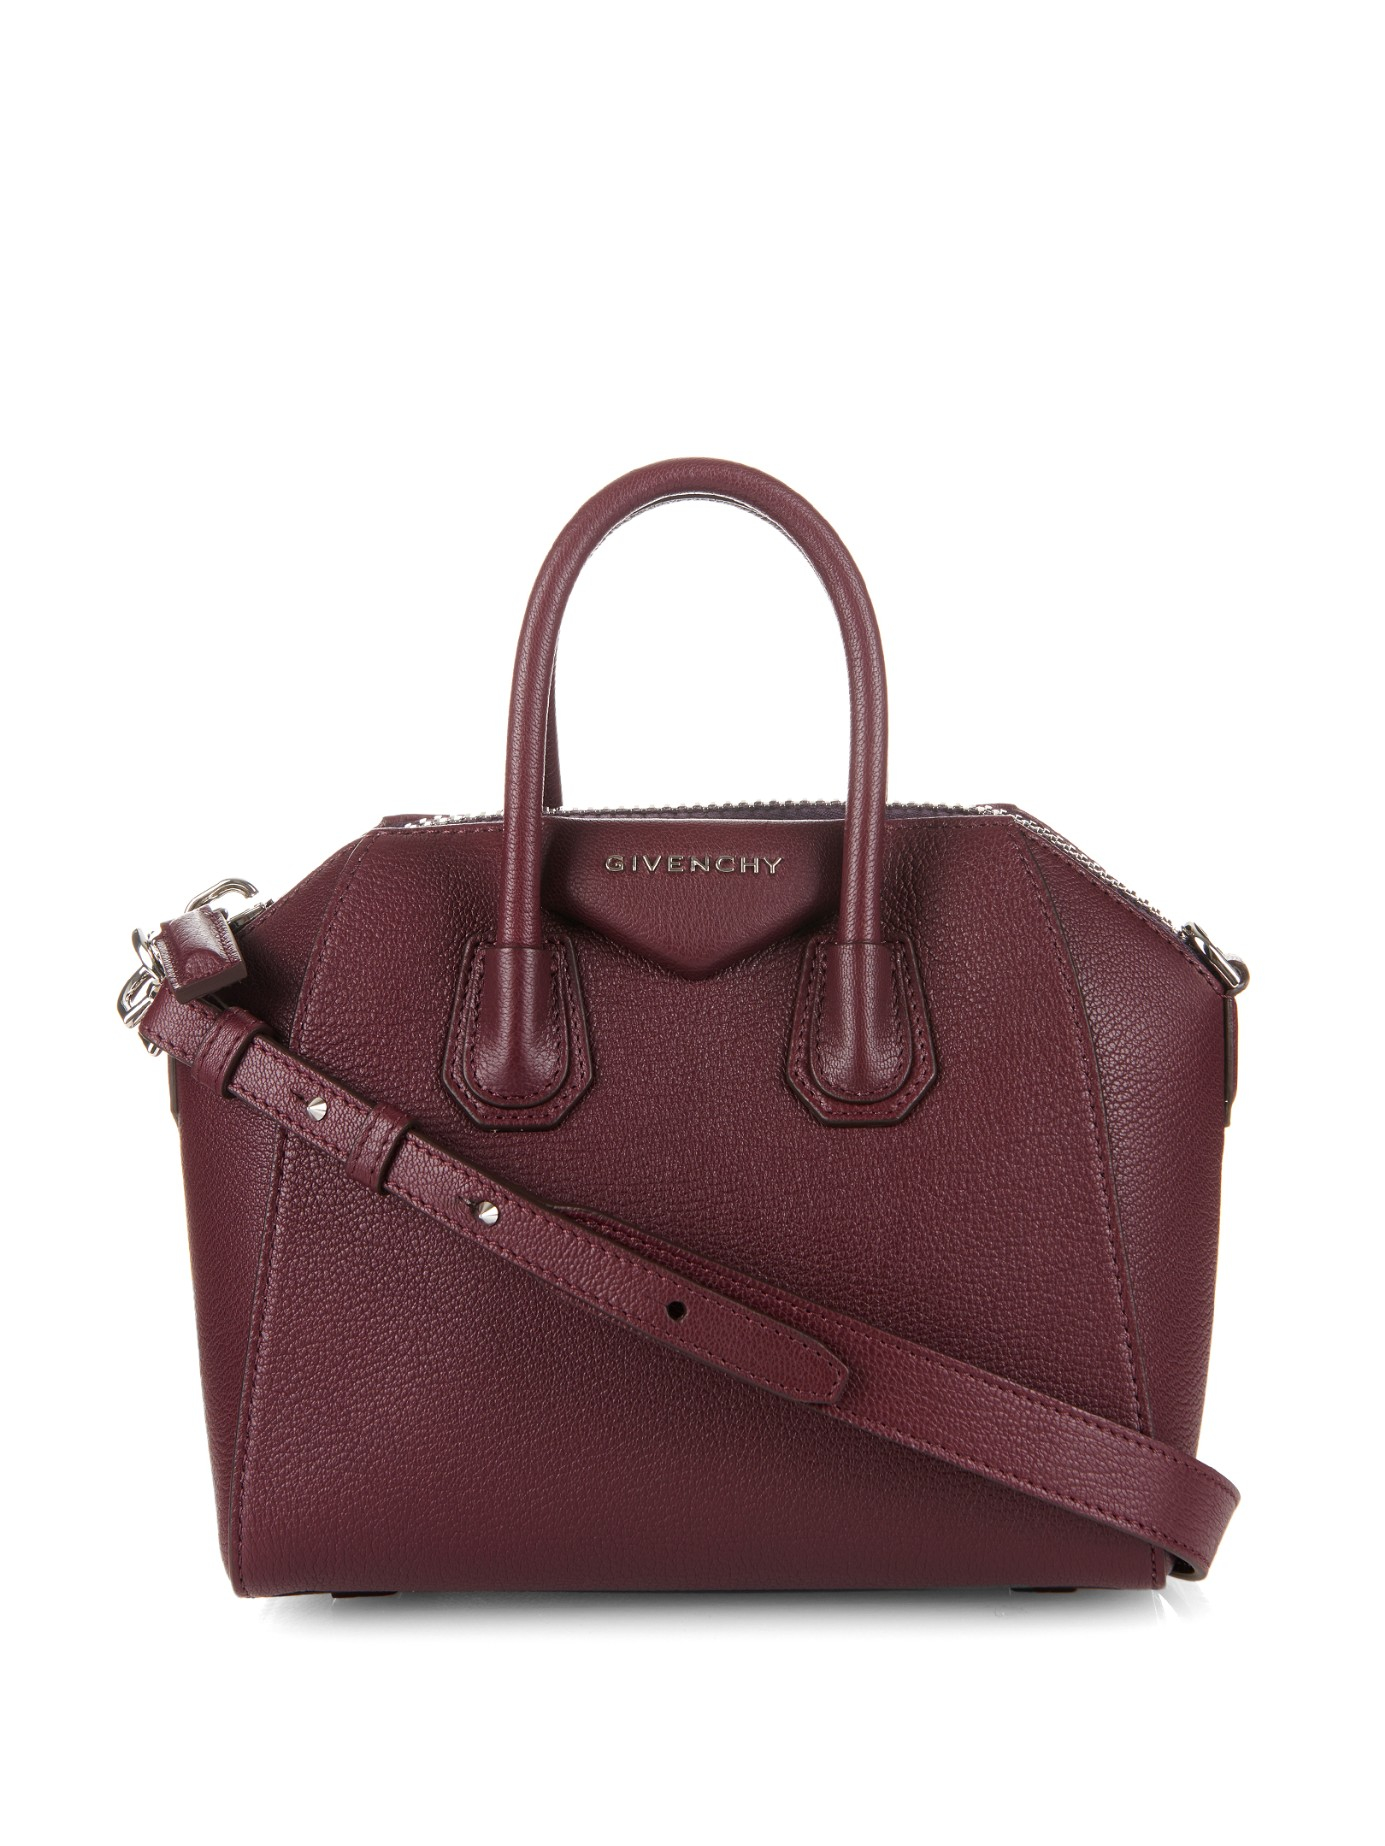 Givenchy Antigona Mini Leather Cross-Body Bag in Brown | Lyst